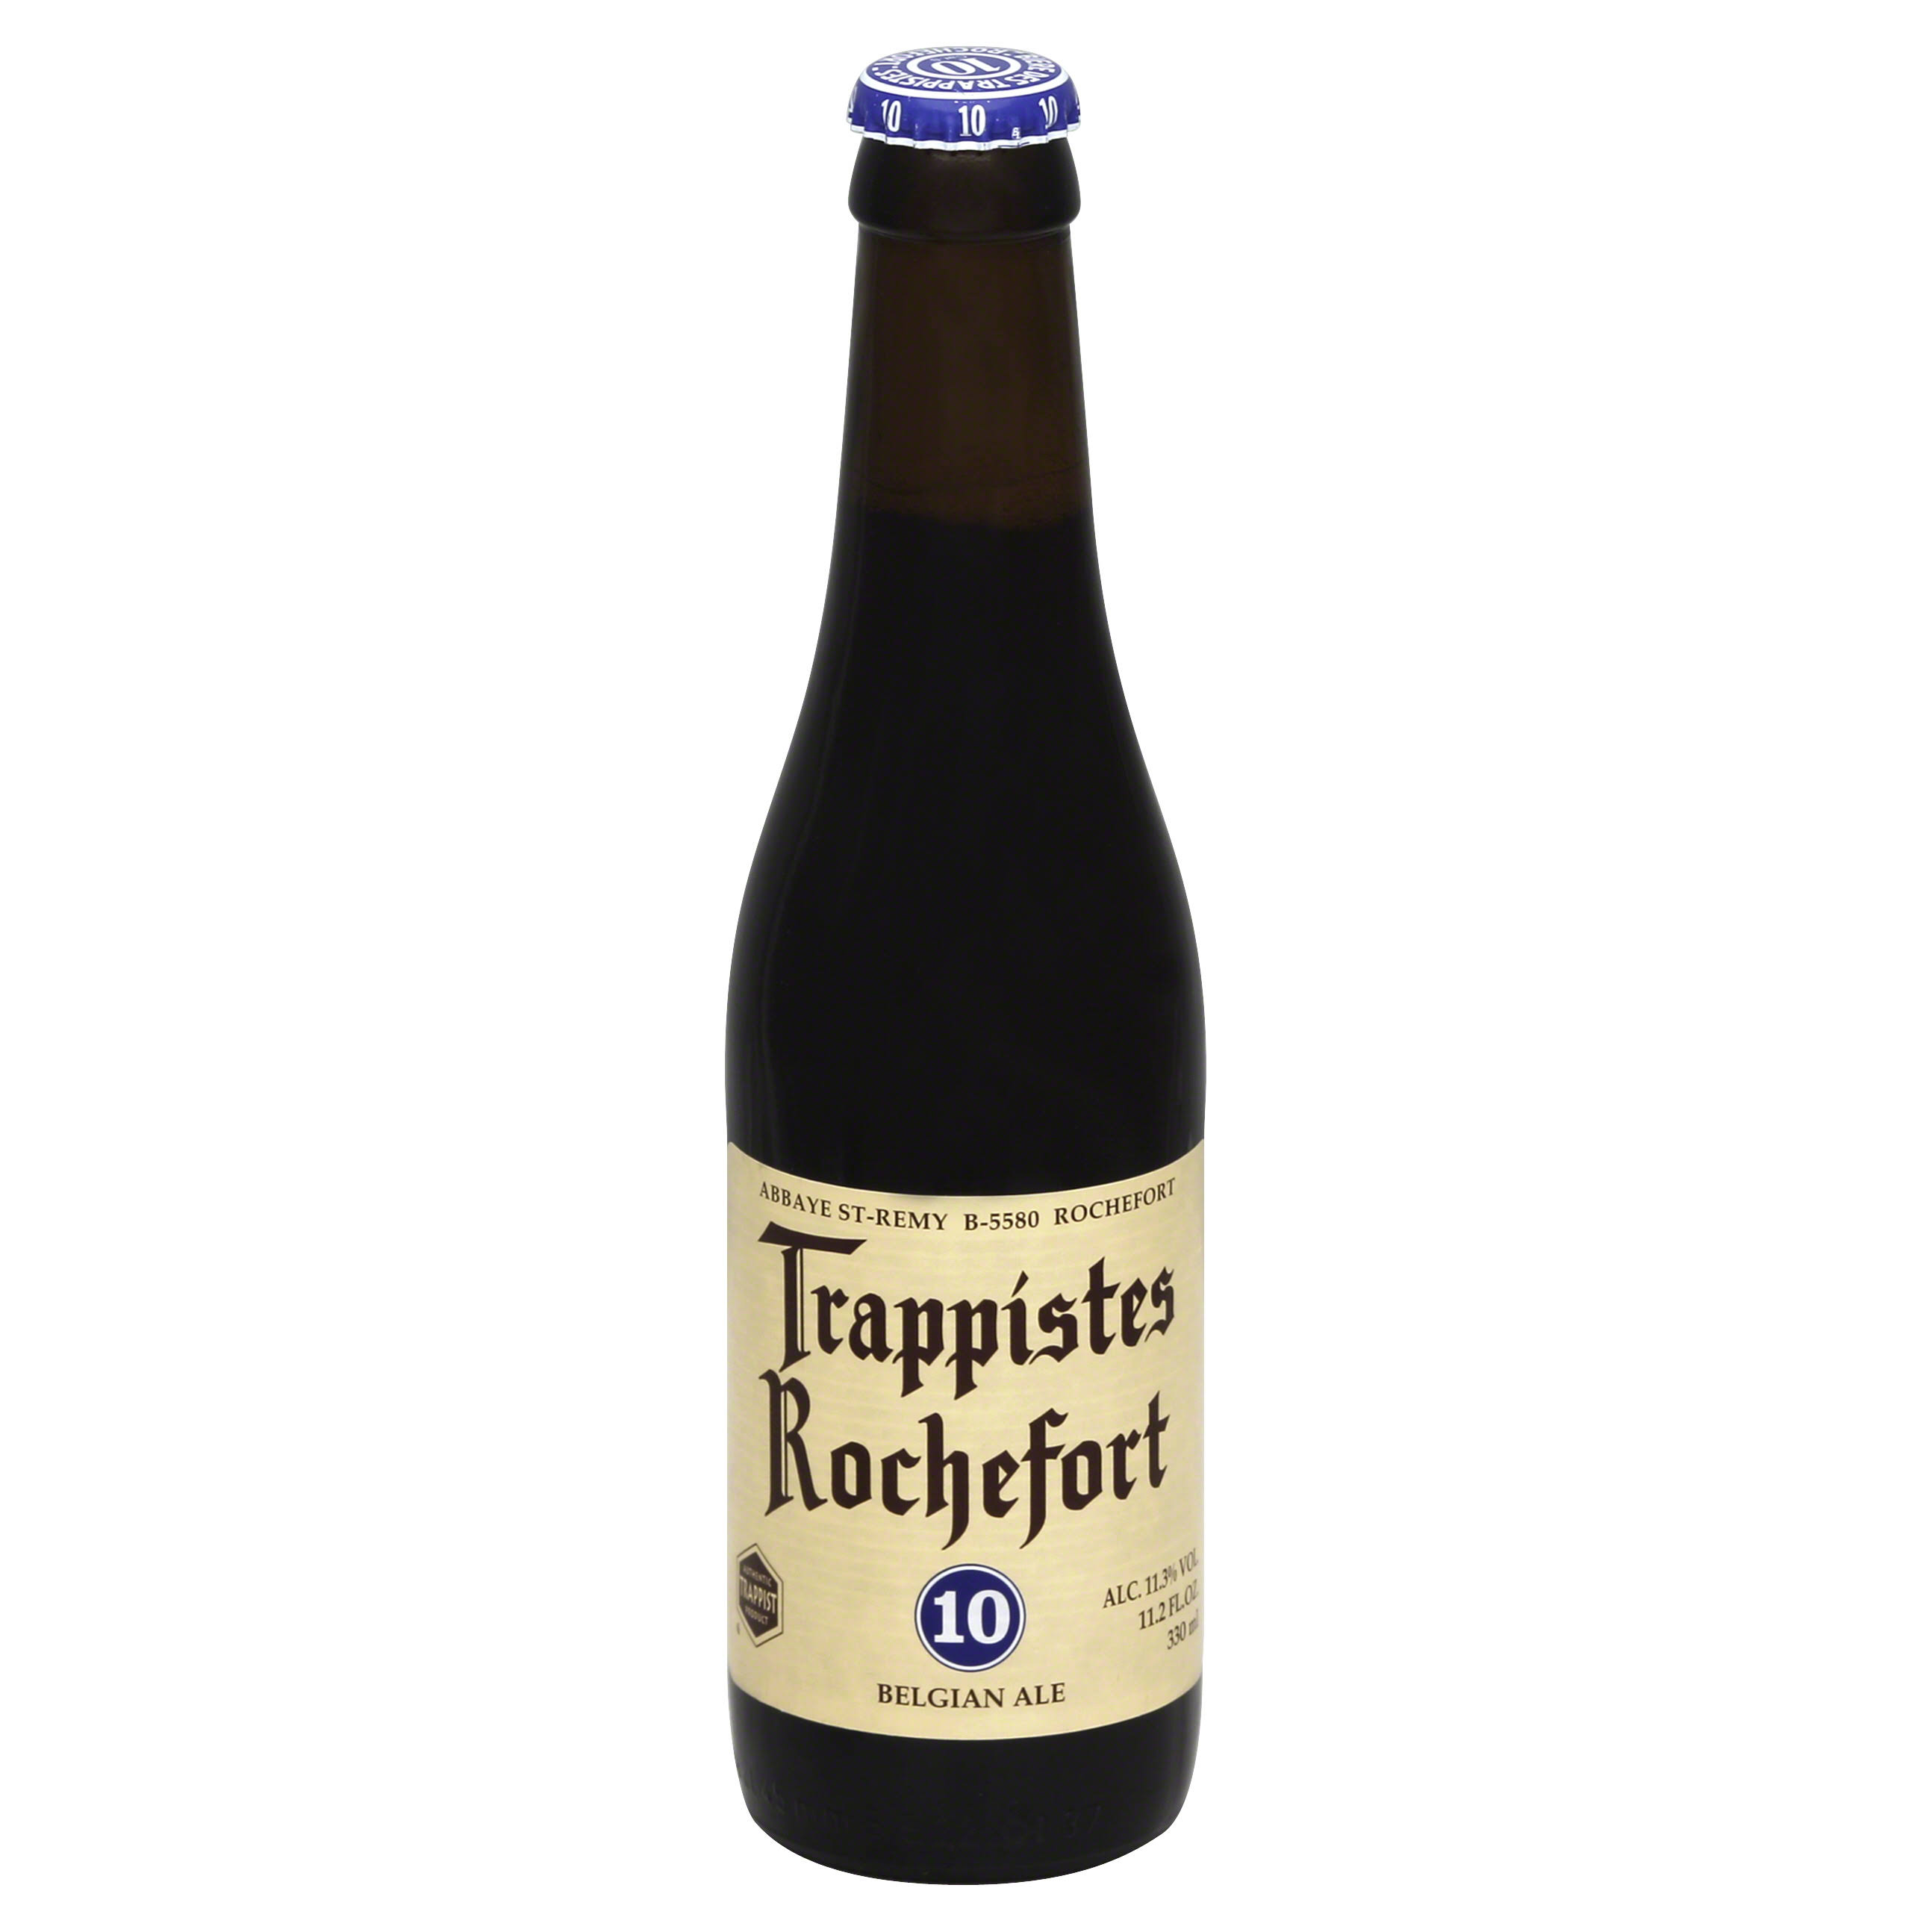 Trappistes Rochefort Ale, Belgian, 10 - 11.2 fl oz